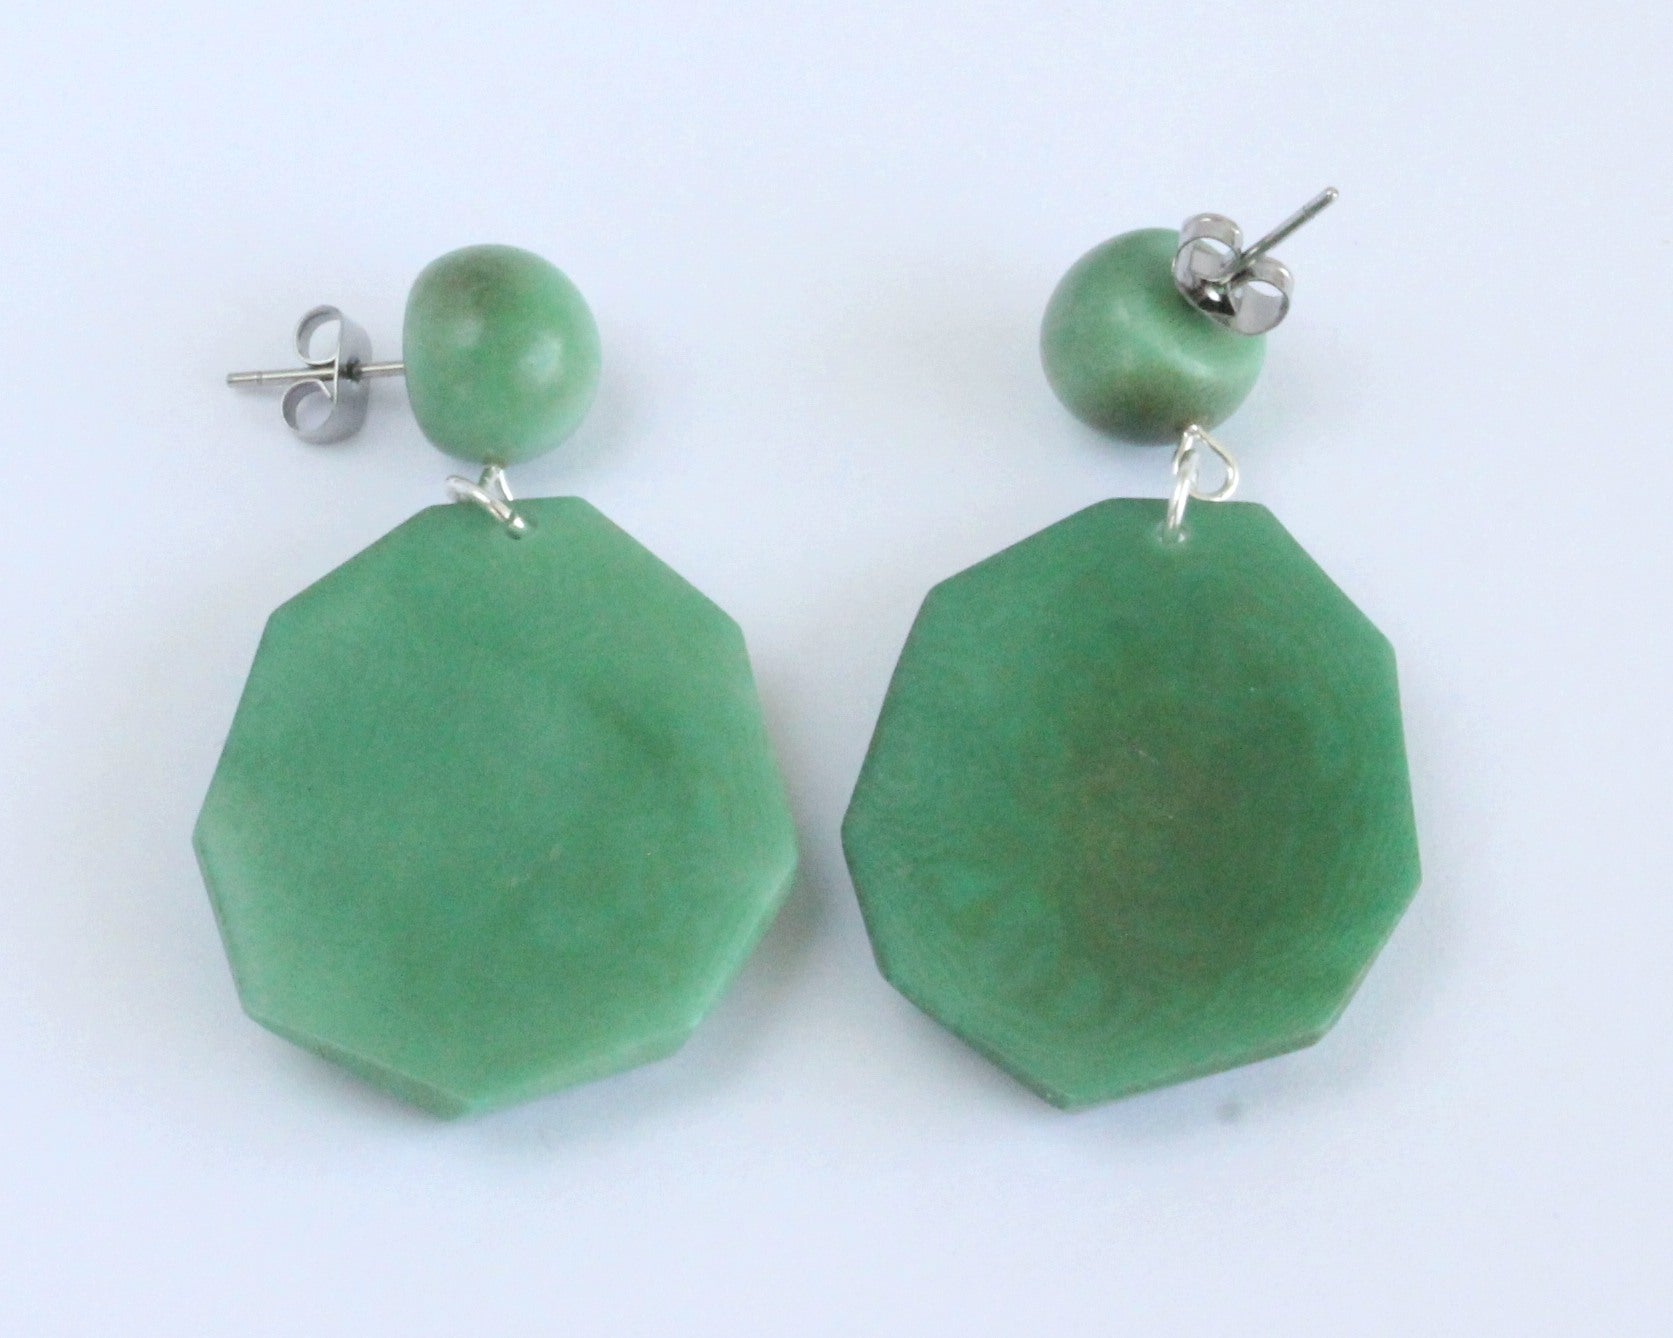 Handmade earring, push back, tagua, colourful, green back